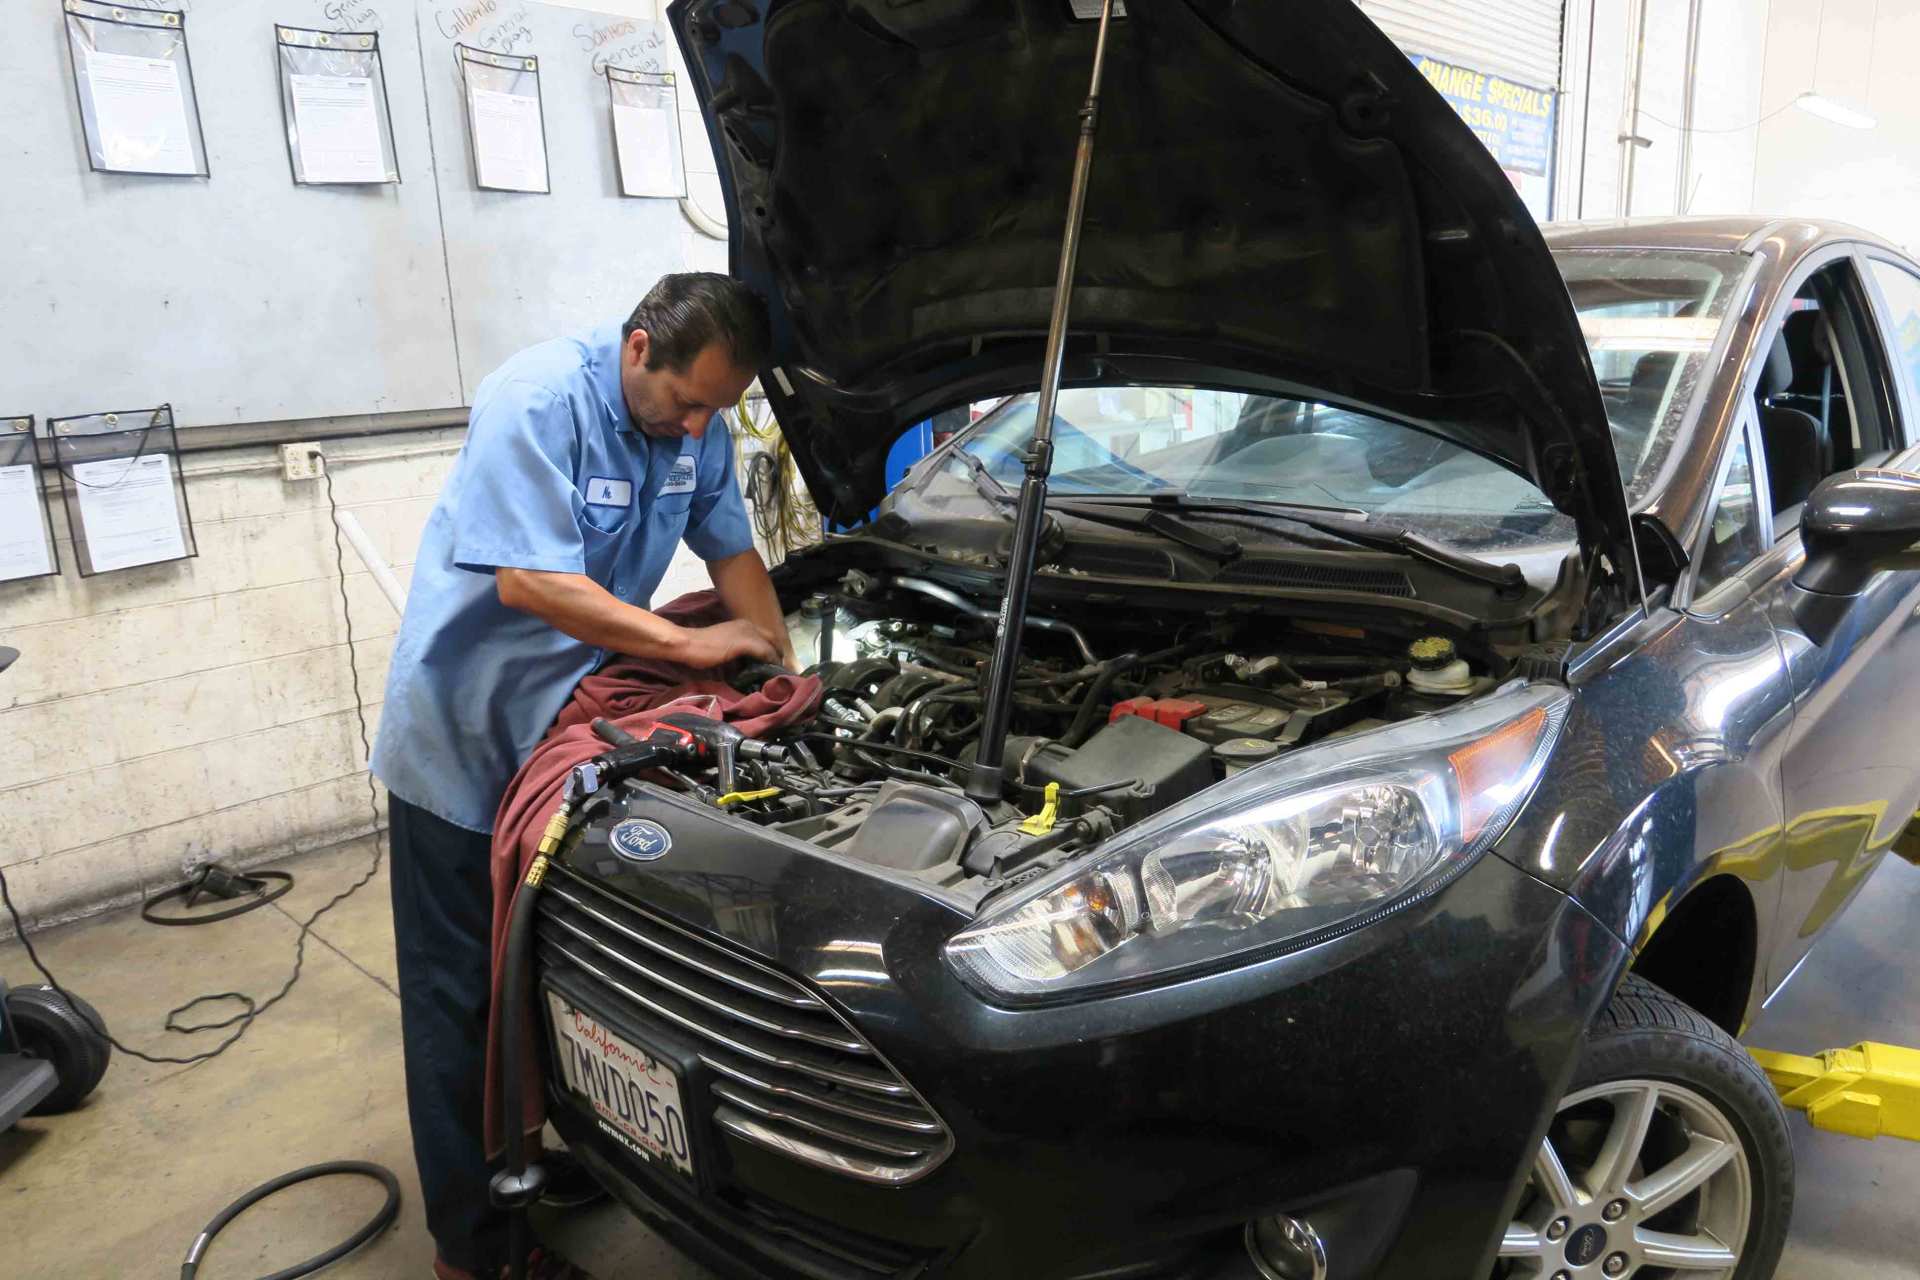 Tune-Ups — Auto Mechanic Fixing Car in Ontario, California